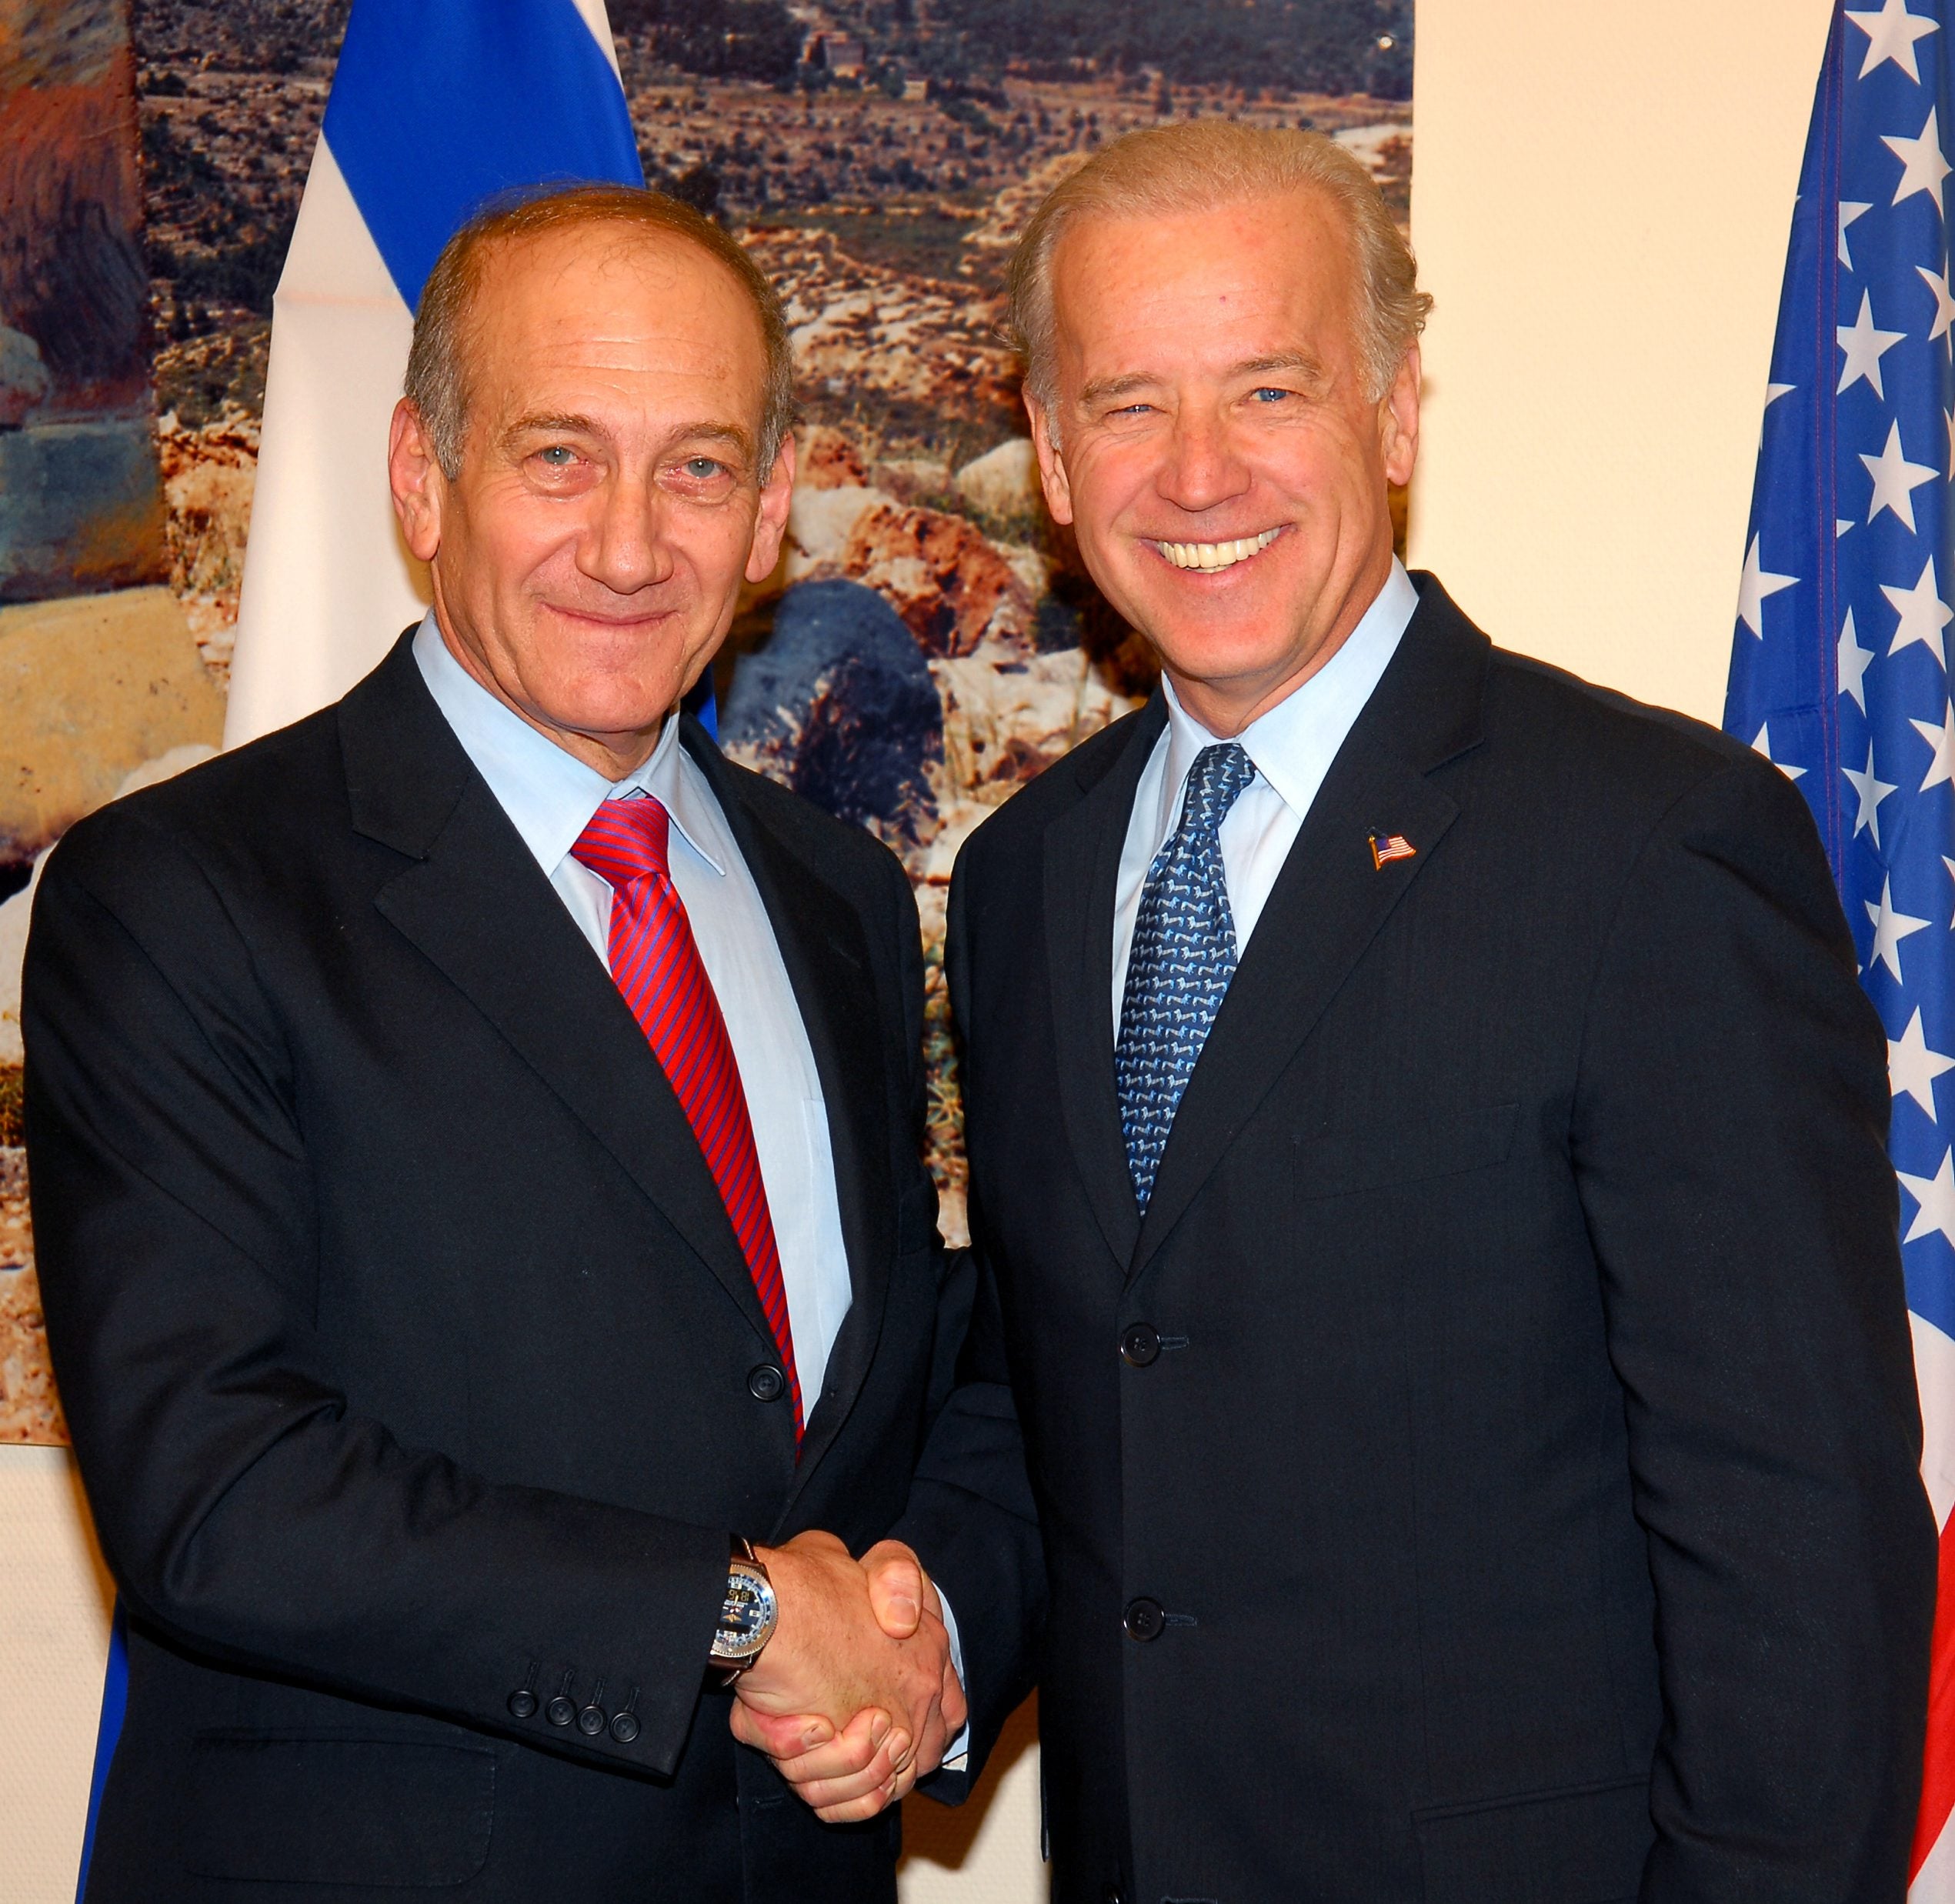 Olmert with Joe Biden in 2006